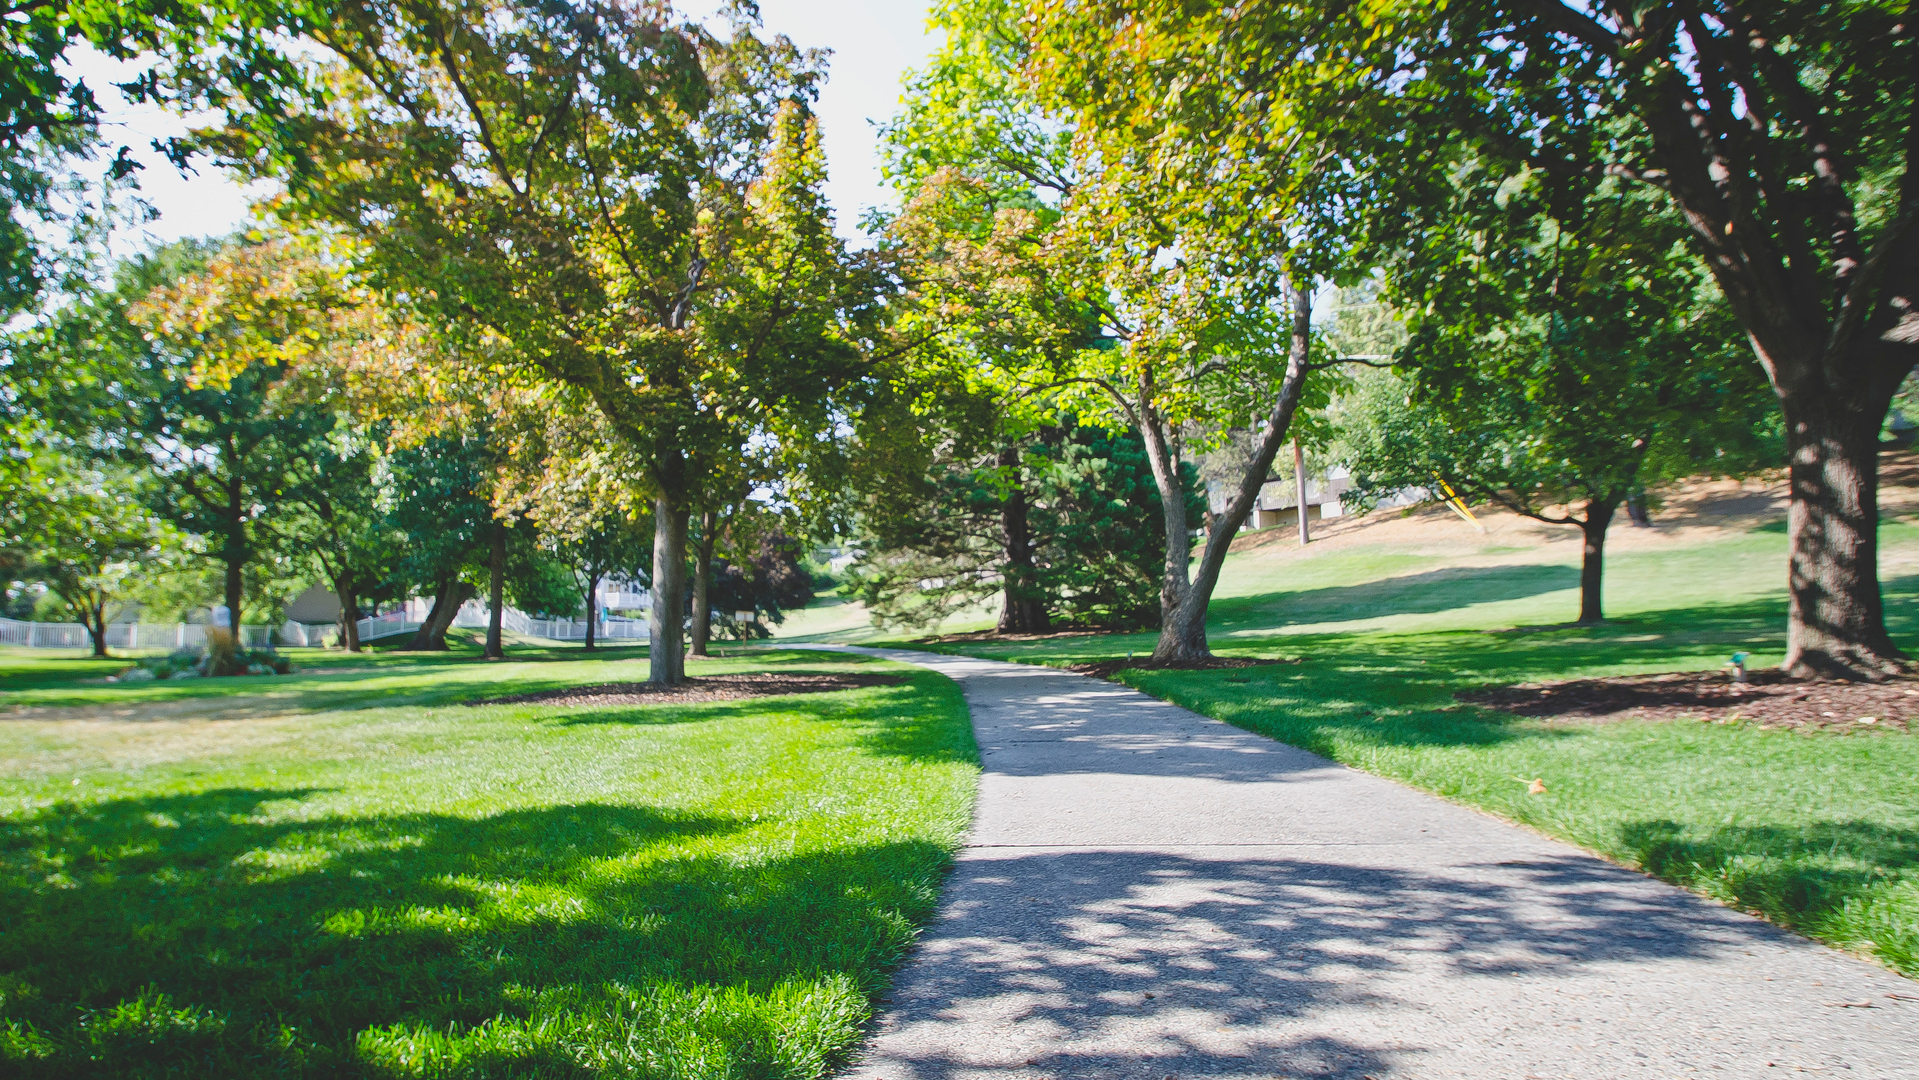 A vibrant green park in Centreville, VA.